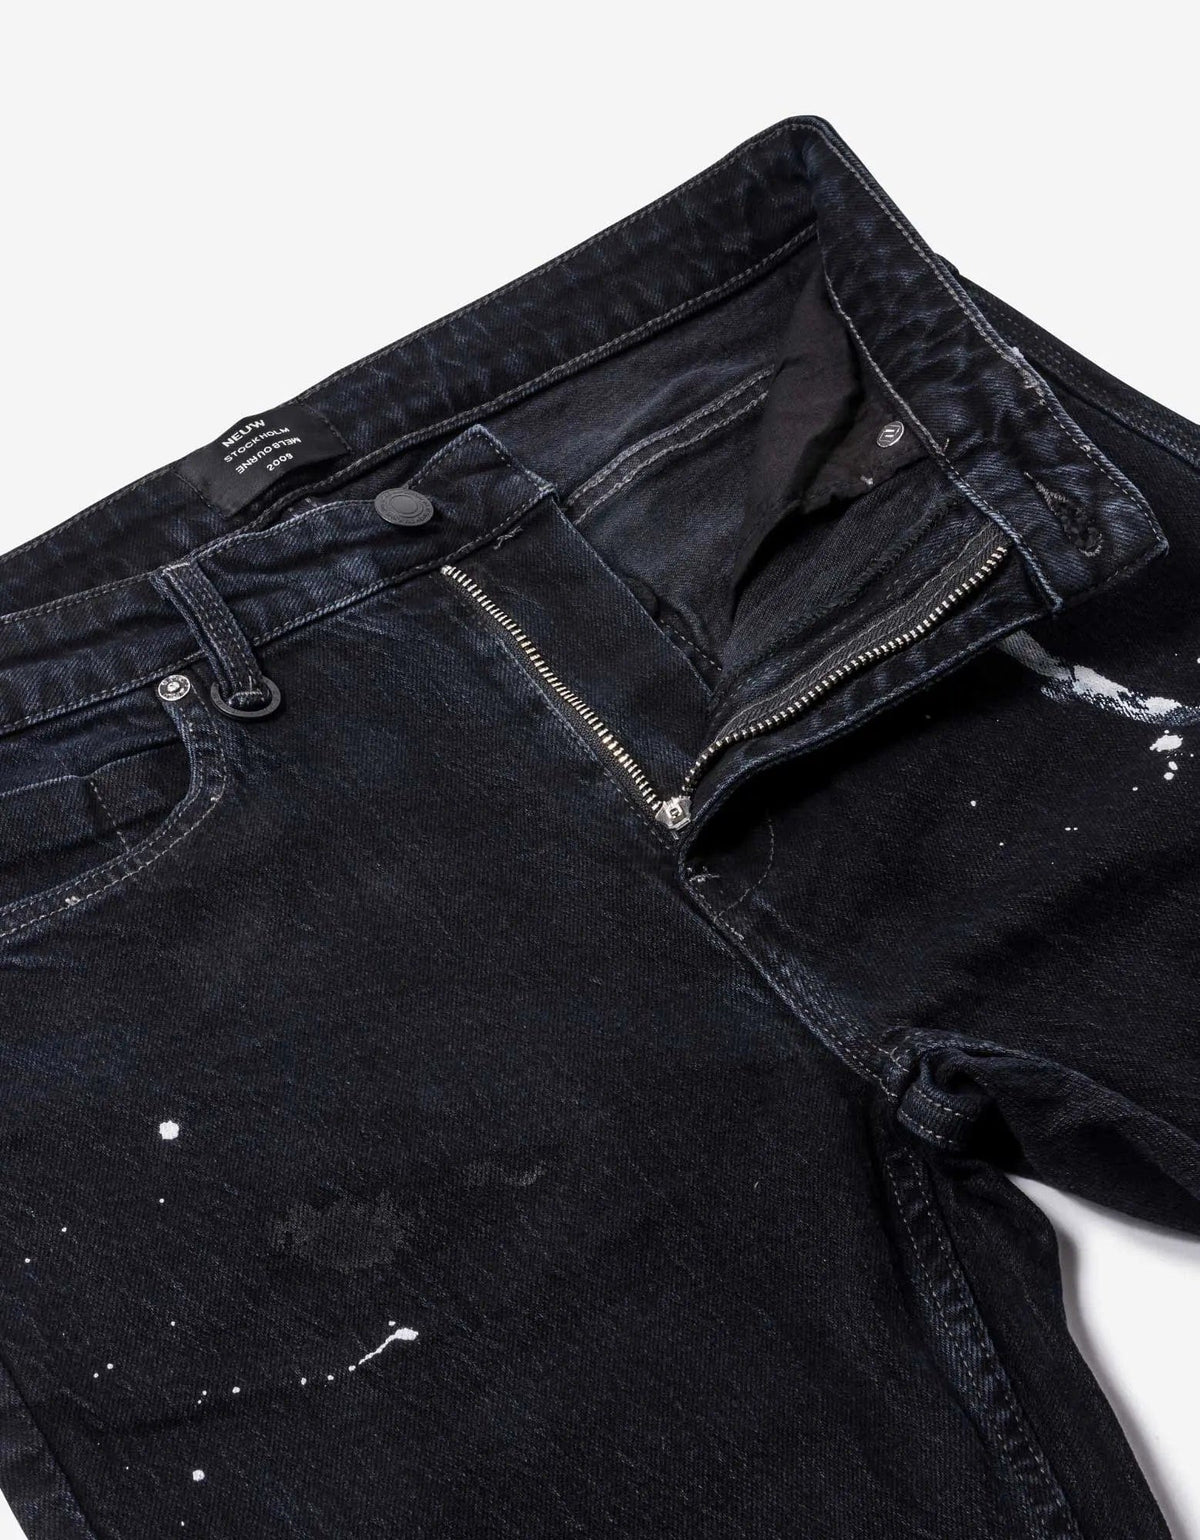 Neuw Neuw Rebel Skinny Unguarded Art Washed Black Jeans